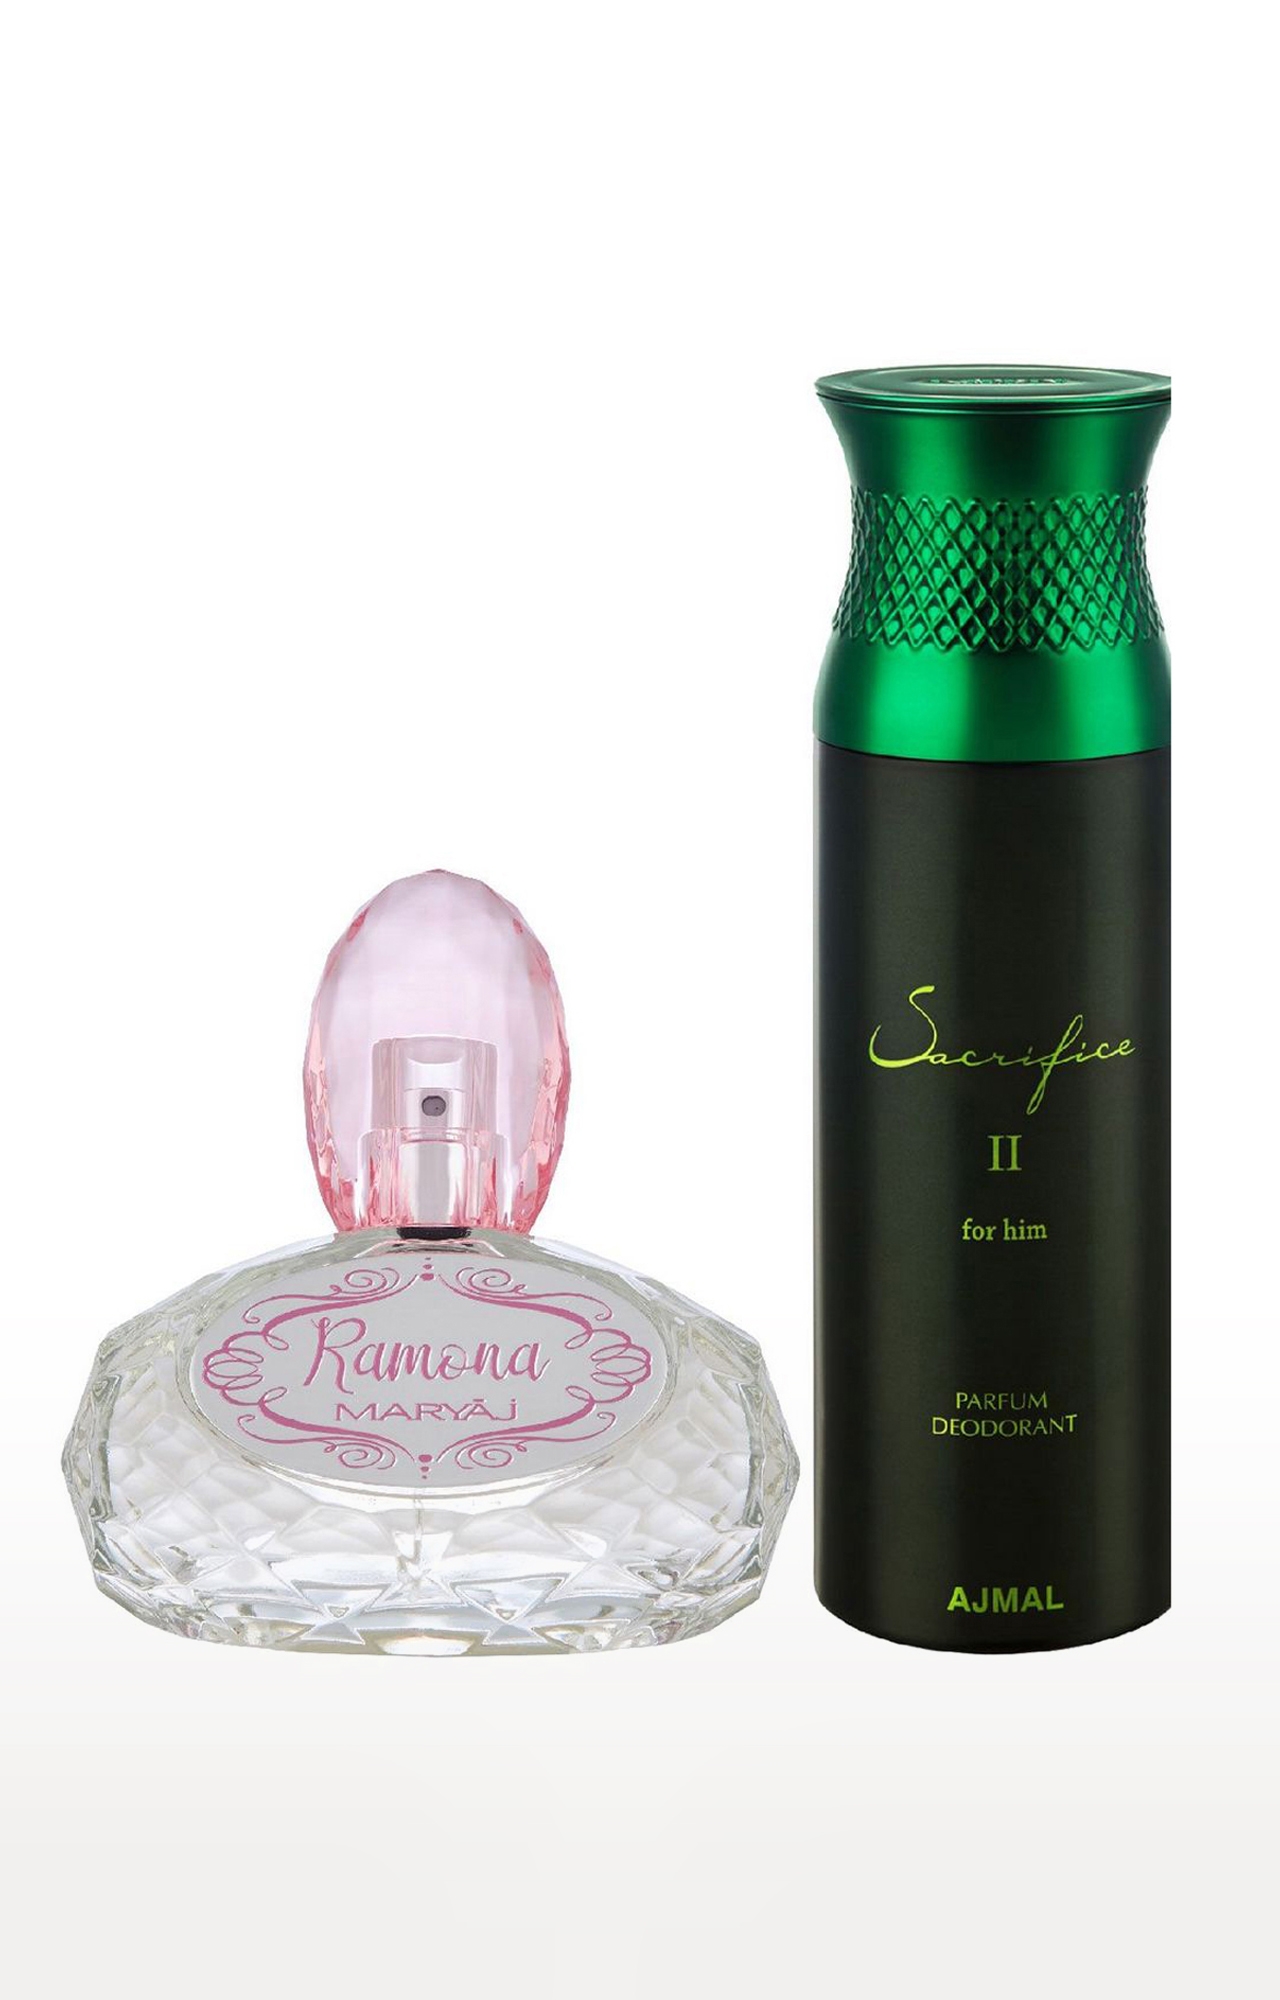 Maryaj Ramona Eau De Parfum Perfume 100ml for Women and Ajmal Sacrifice II for Him Deodorant Fruity Fragrance 200ml for Men